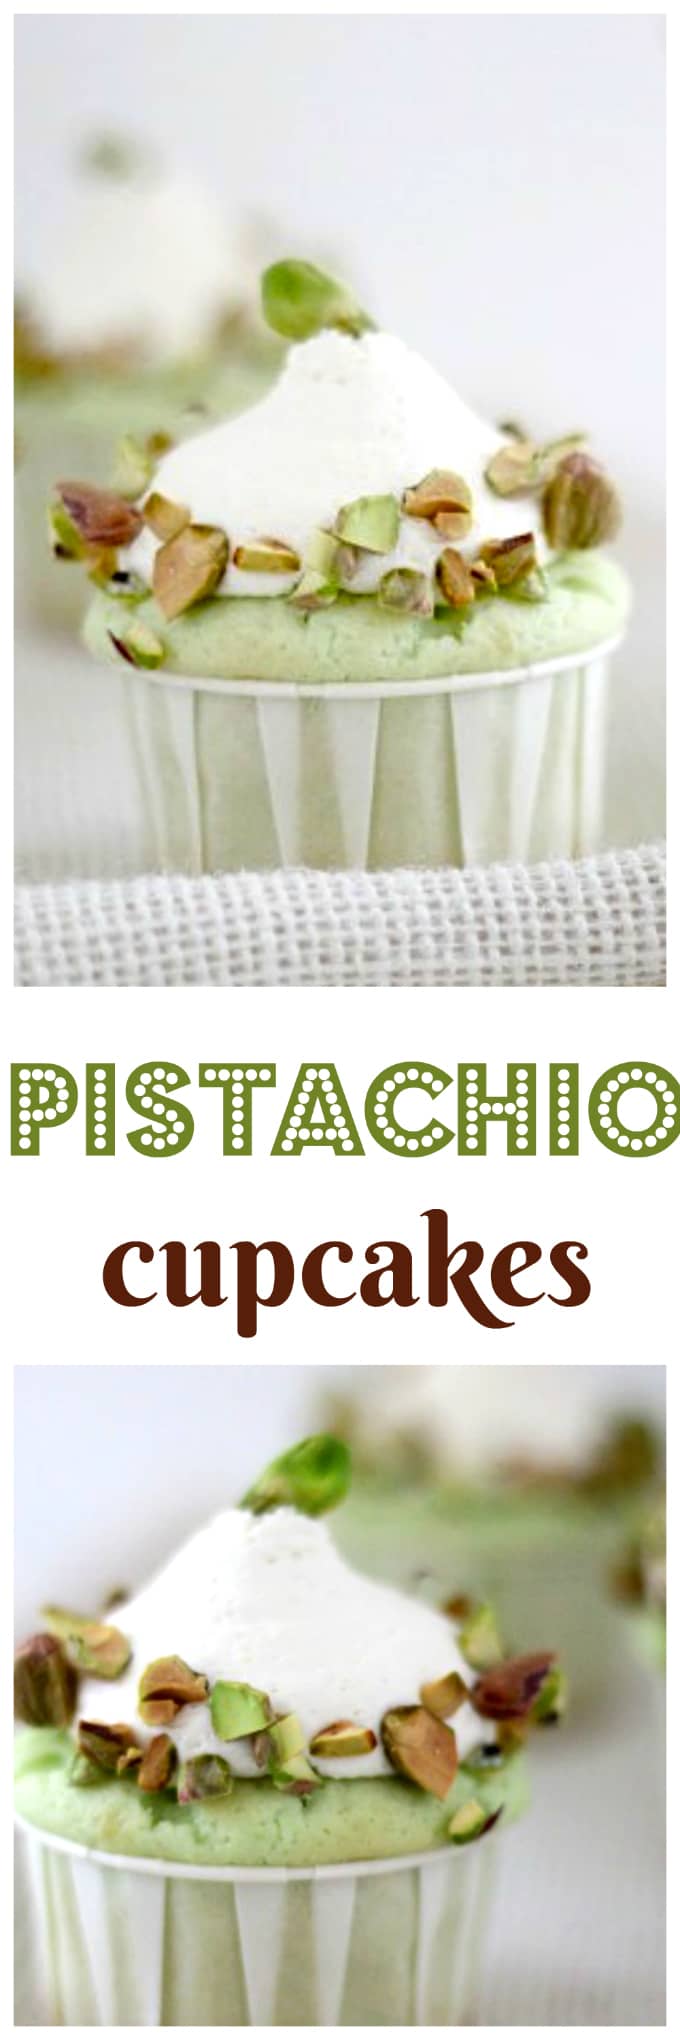 Pistachio cupcakes from @createdbydiane